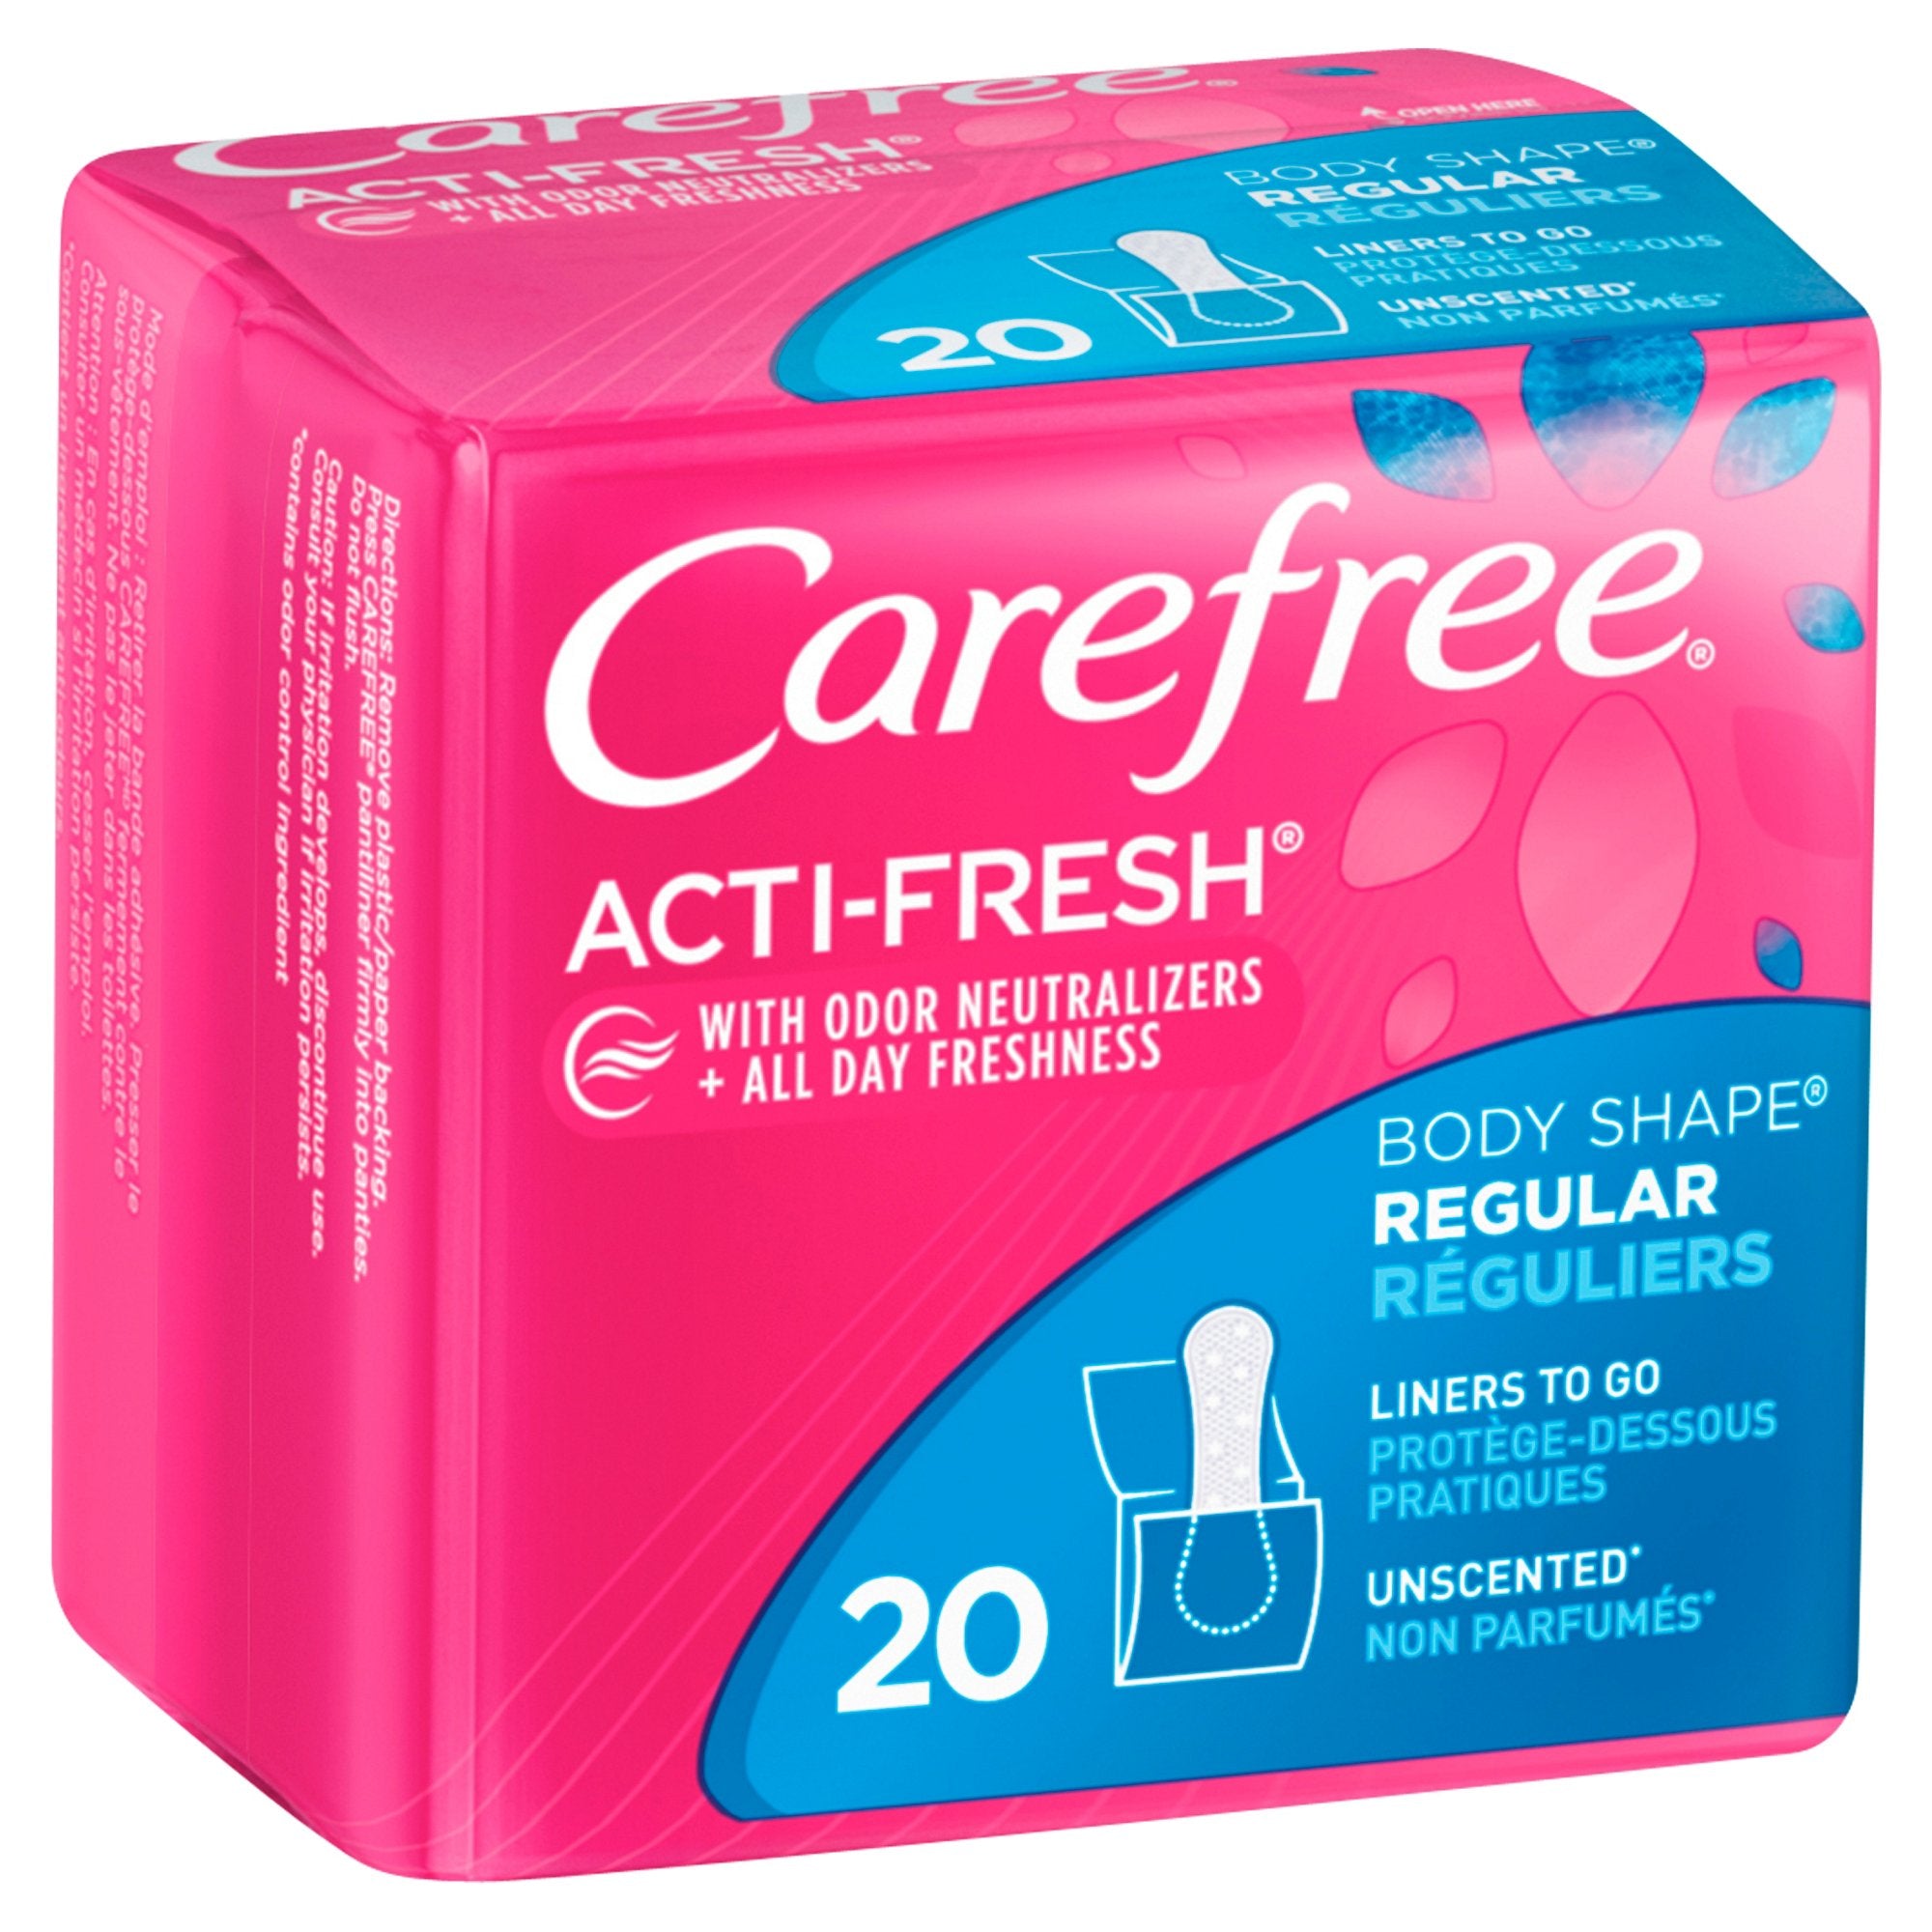 Carefree Acti-Fresh Regular Pantiliners, Unscented - 20 Count